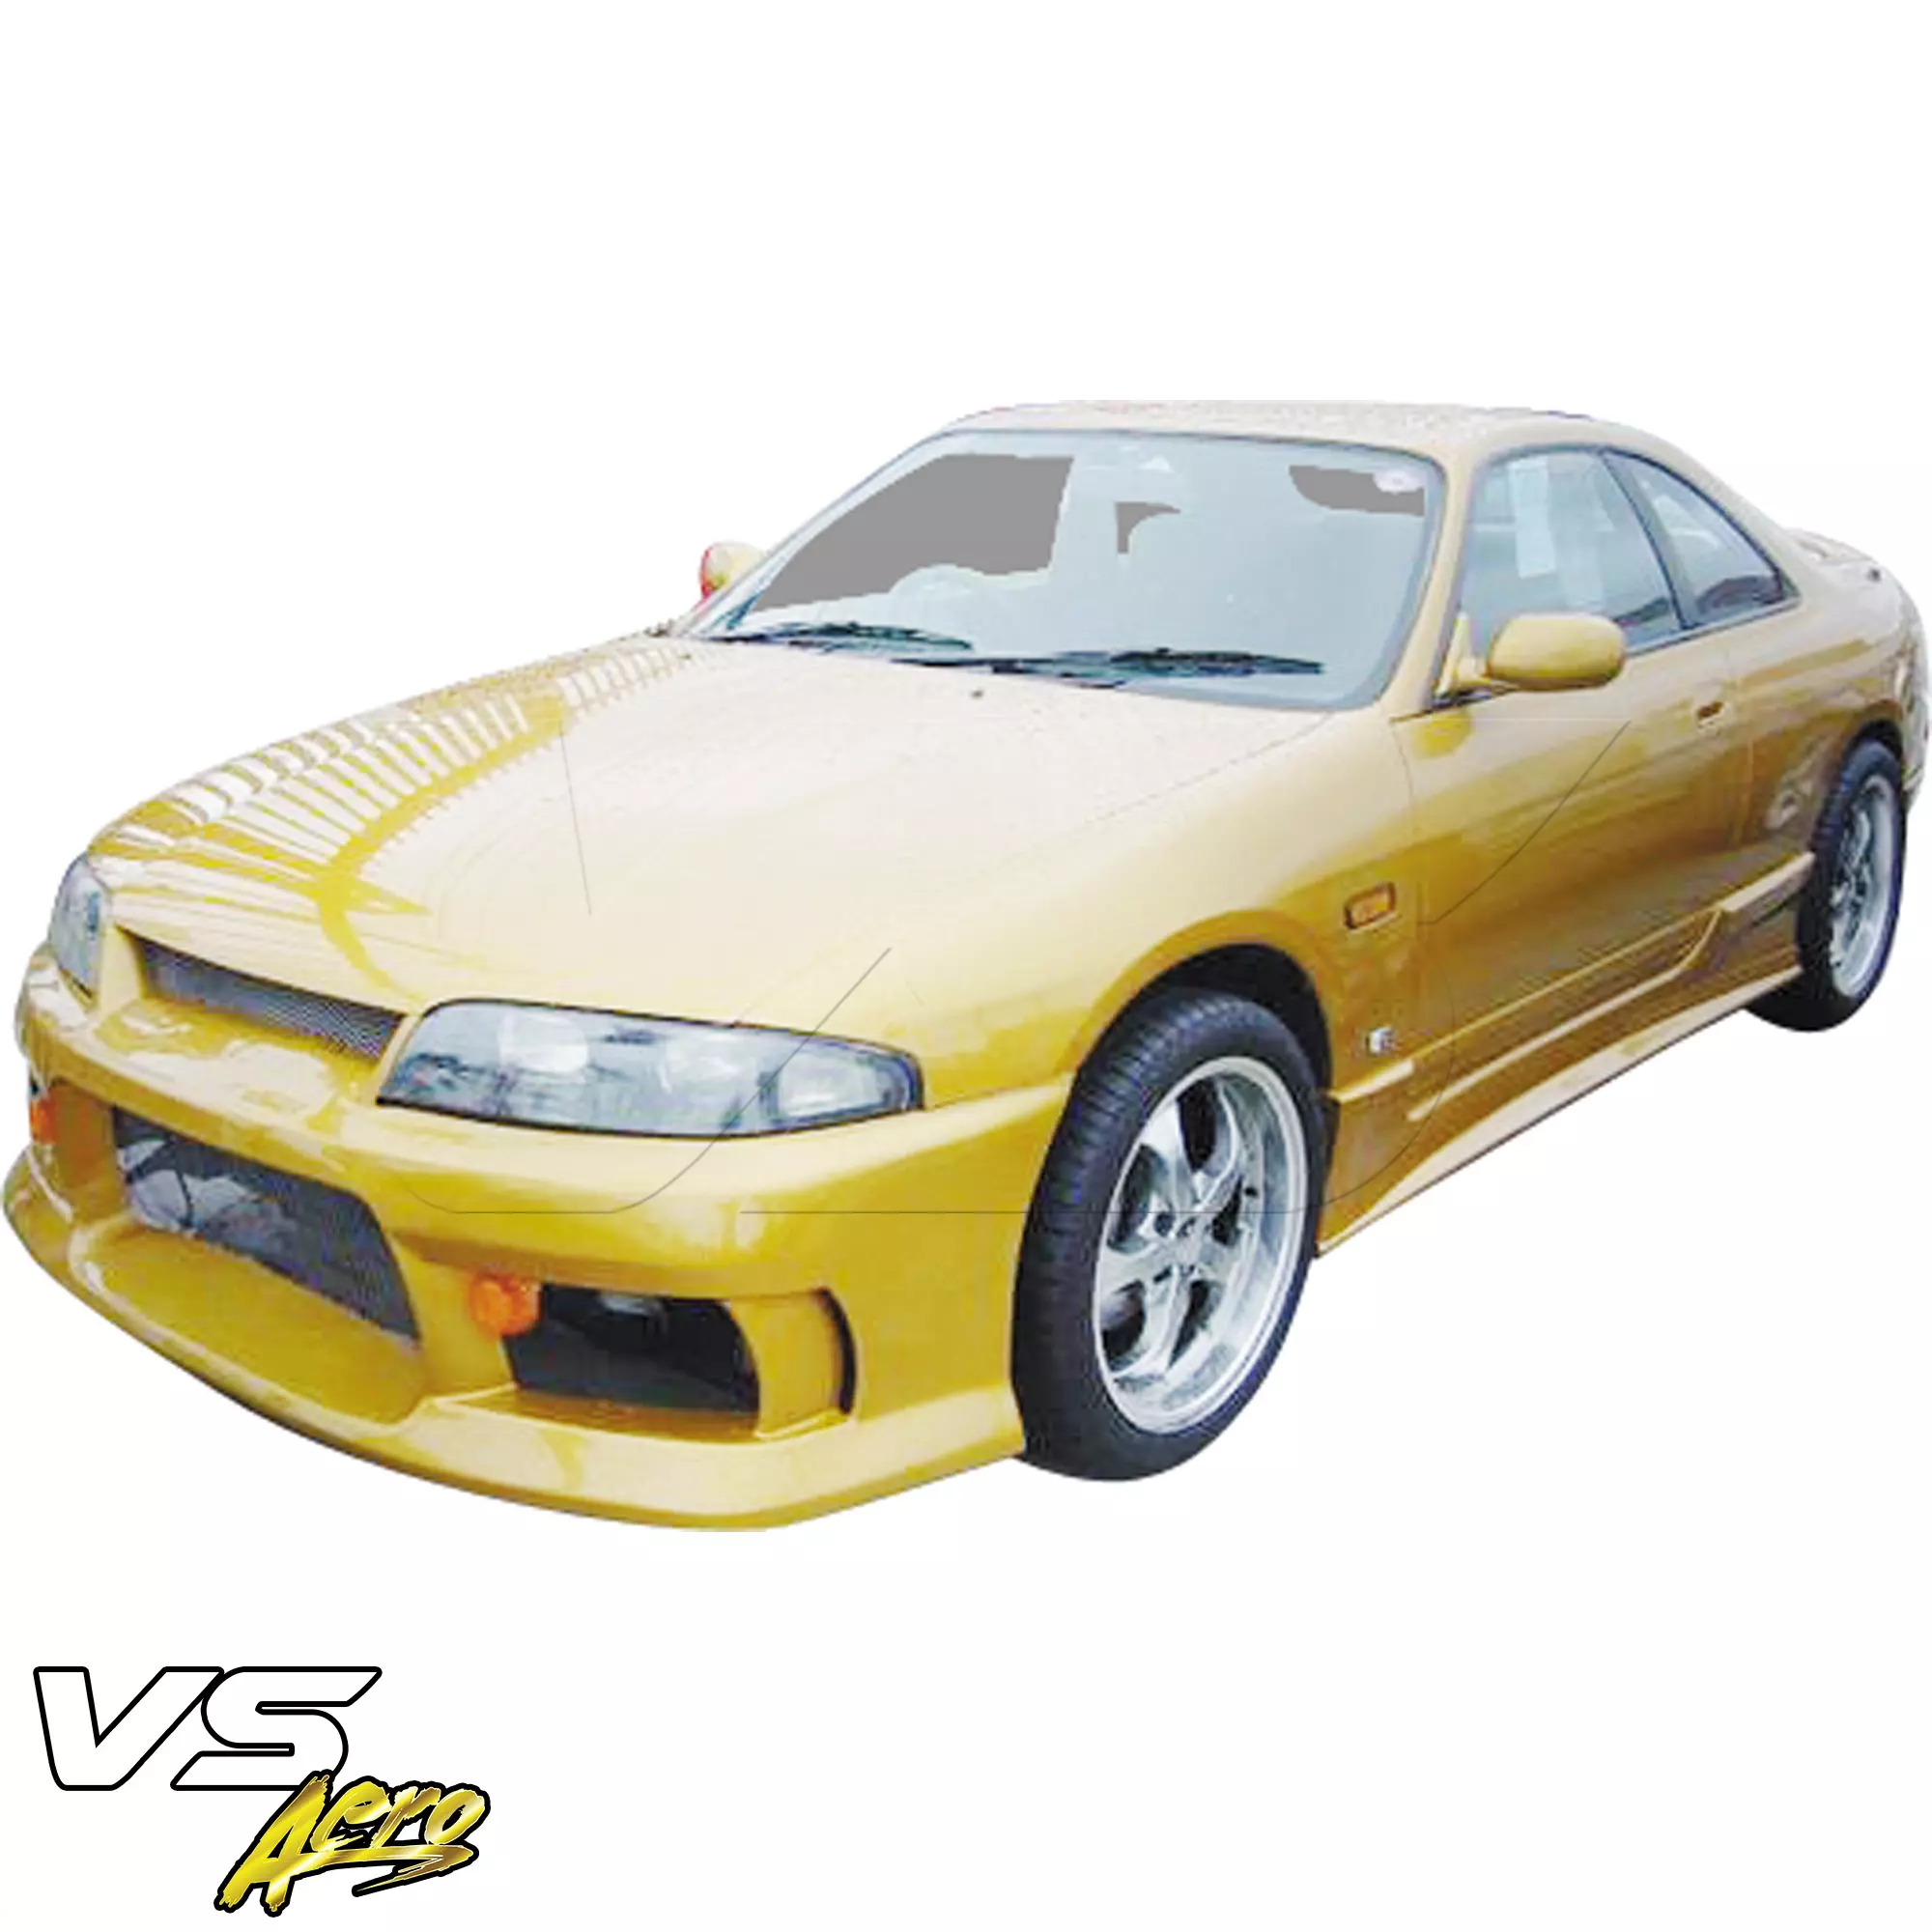 VSaero FRP MSPO v2 Body Kit 4pc > Nissan Skyline R33 GTS 1995-1998 > 2dr Coupe - Image 21